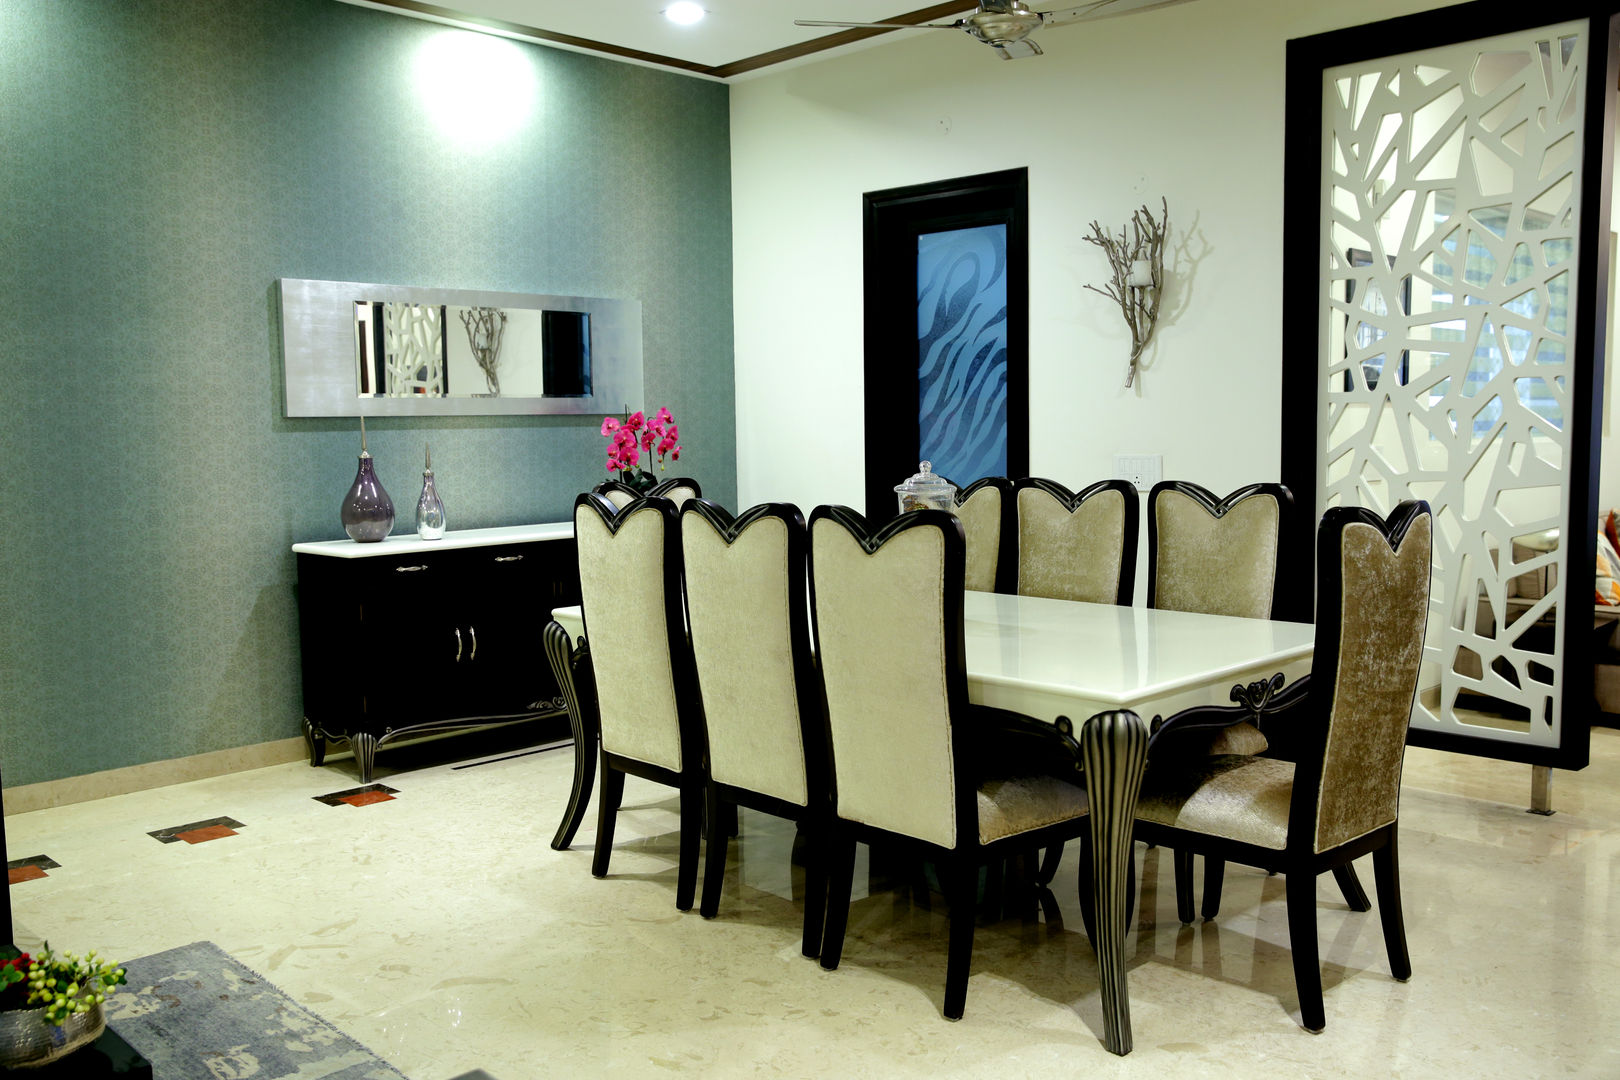 Residence, renu soni interior design renu soni interior design Ruang Makan Modern Accessories & decoration